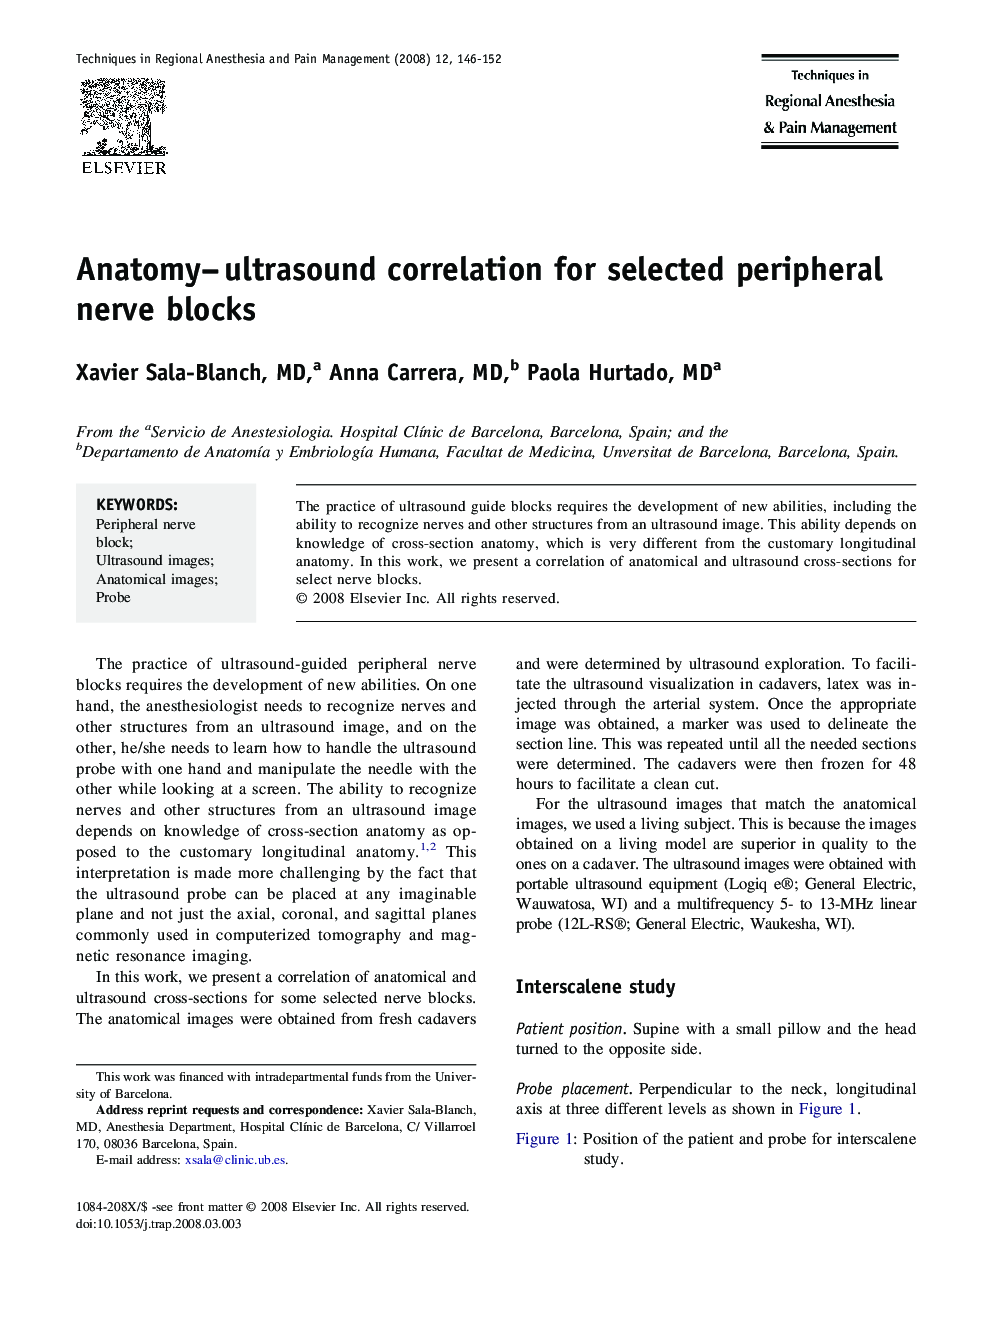 Anatomy–ultrasound correlation for selected peripheral nerve blocks 